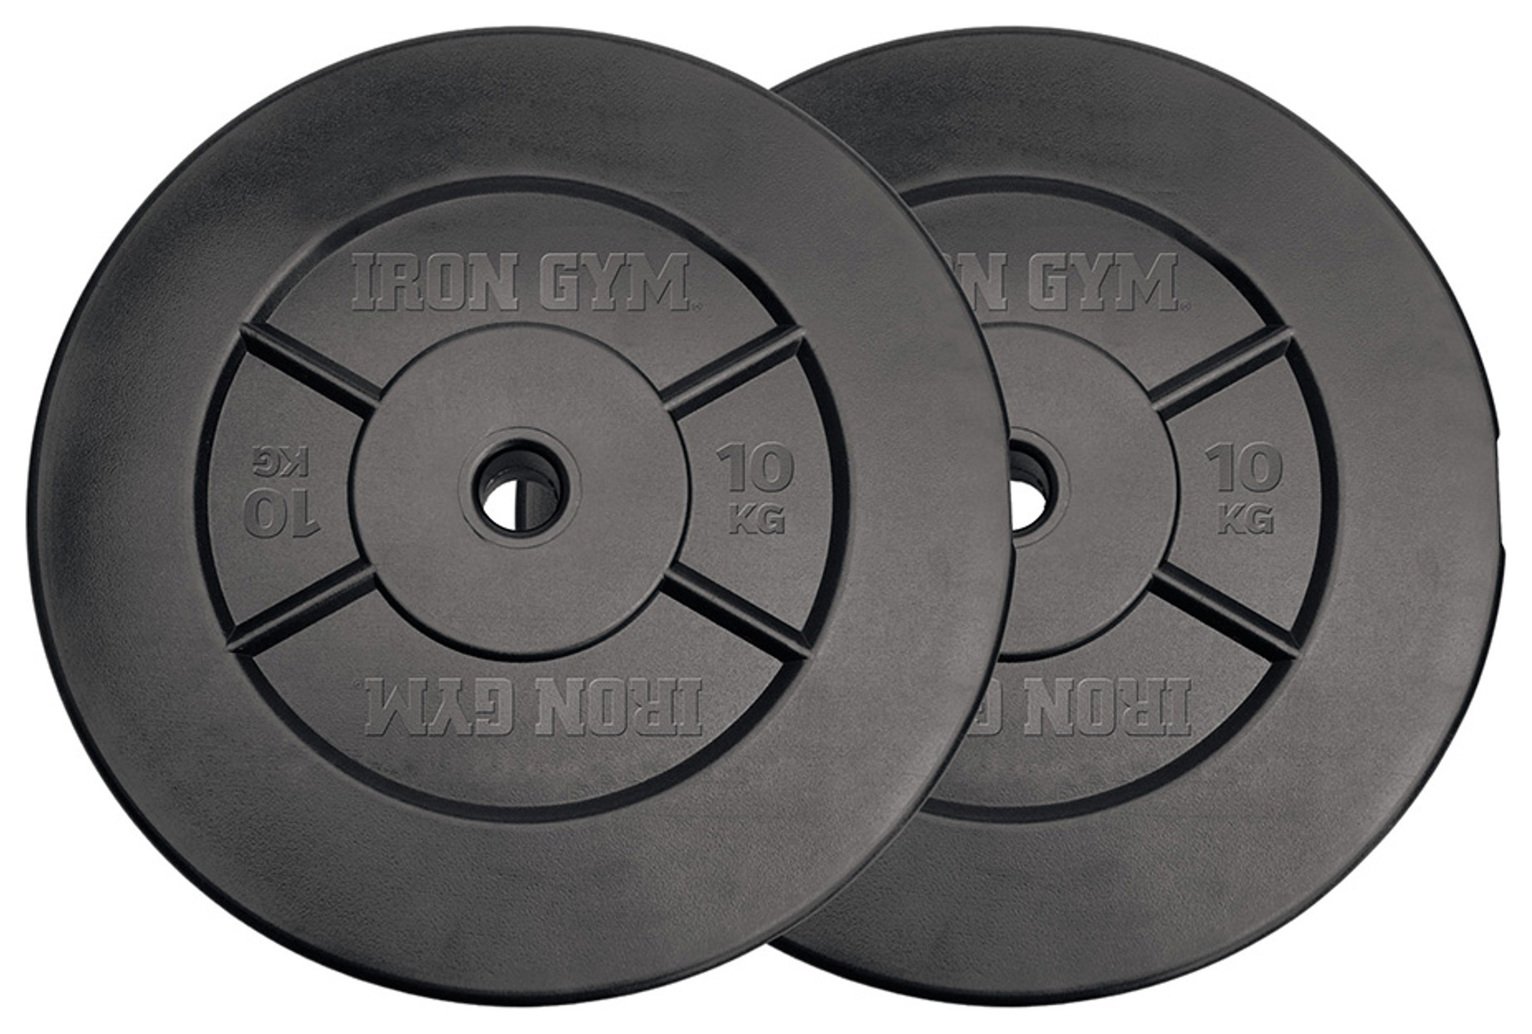 Iron Gym 20kg Plate Set 10 kg x 2